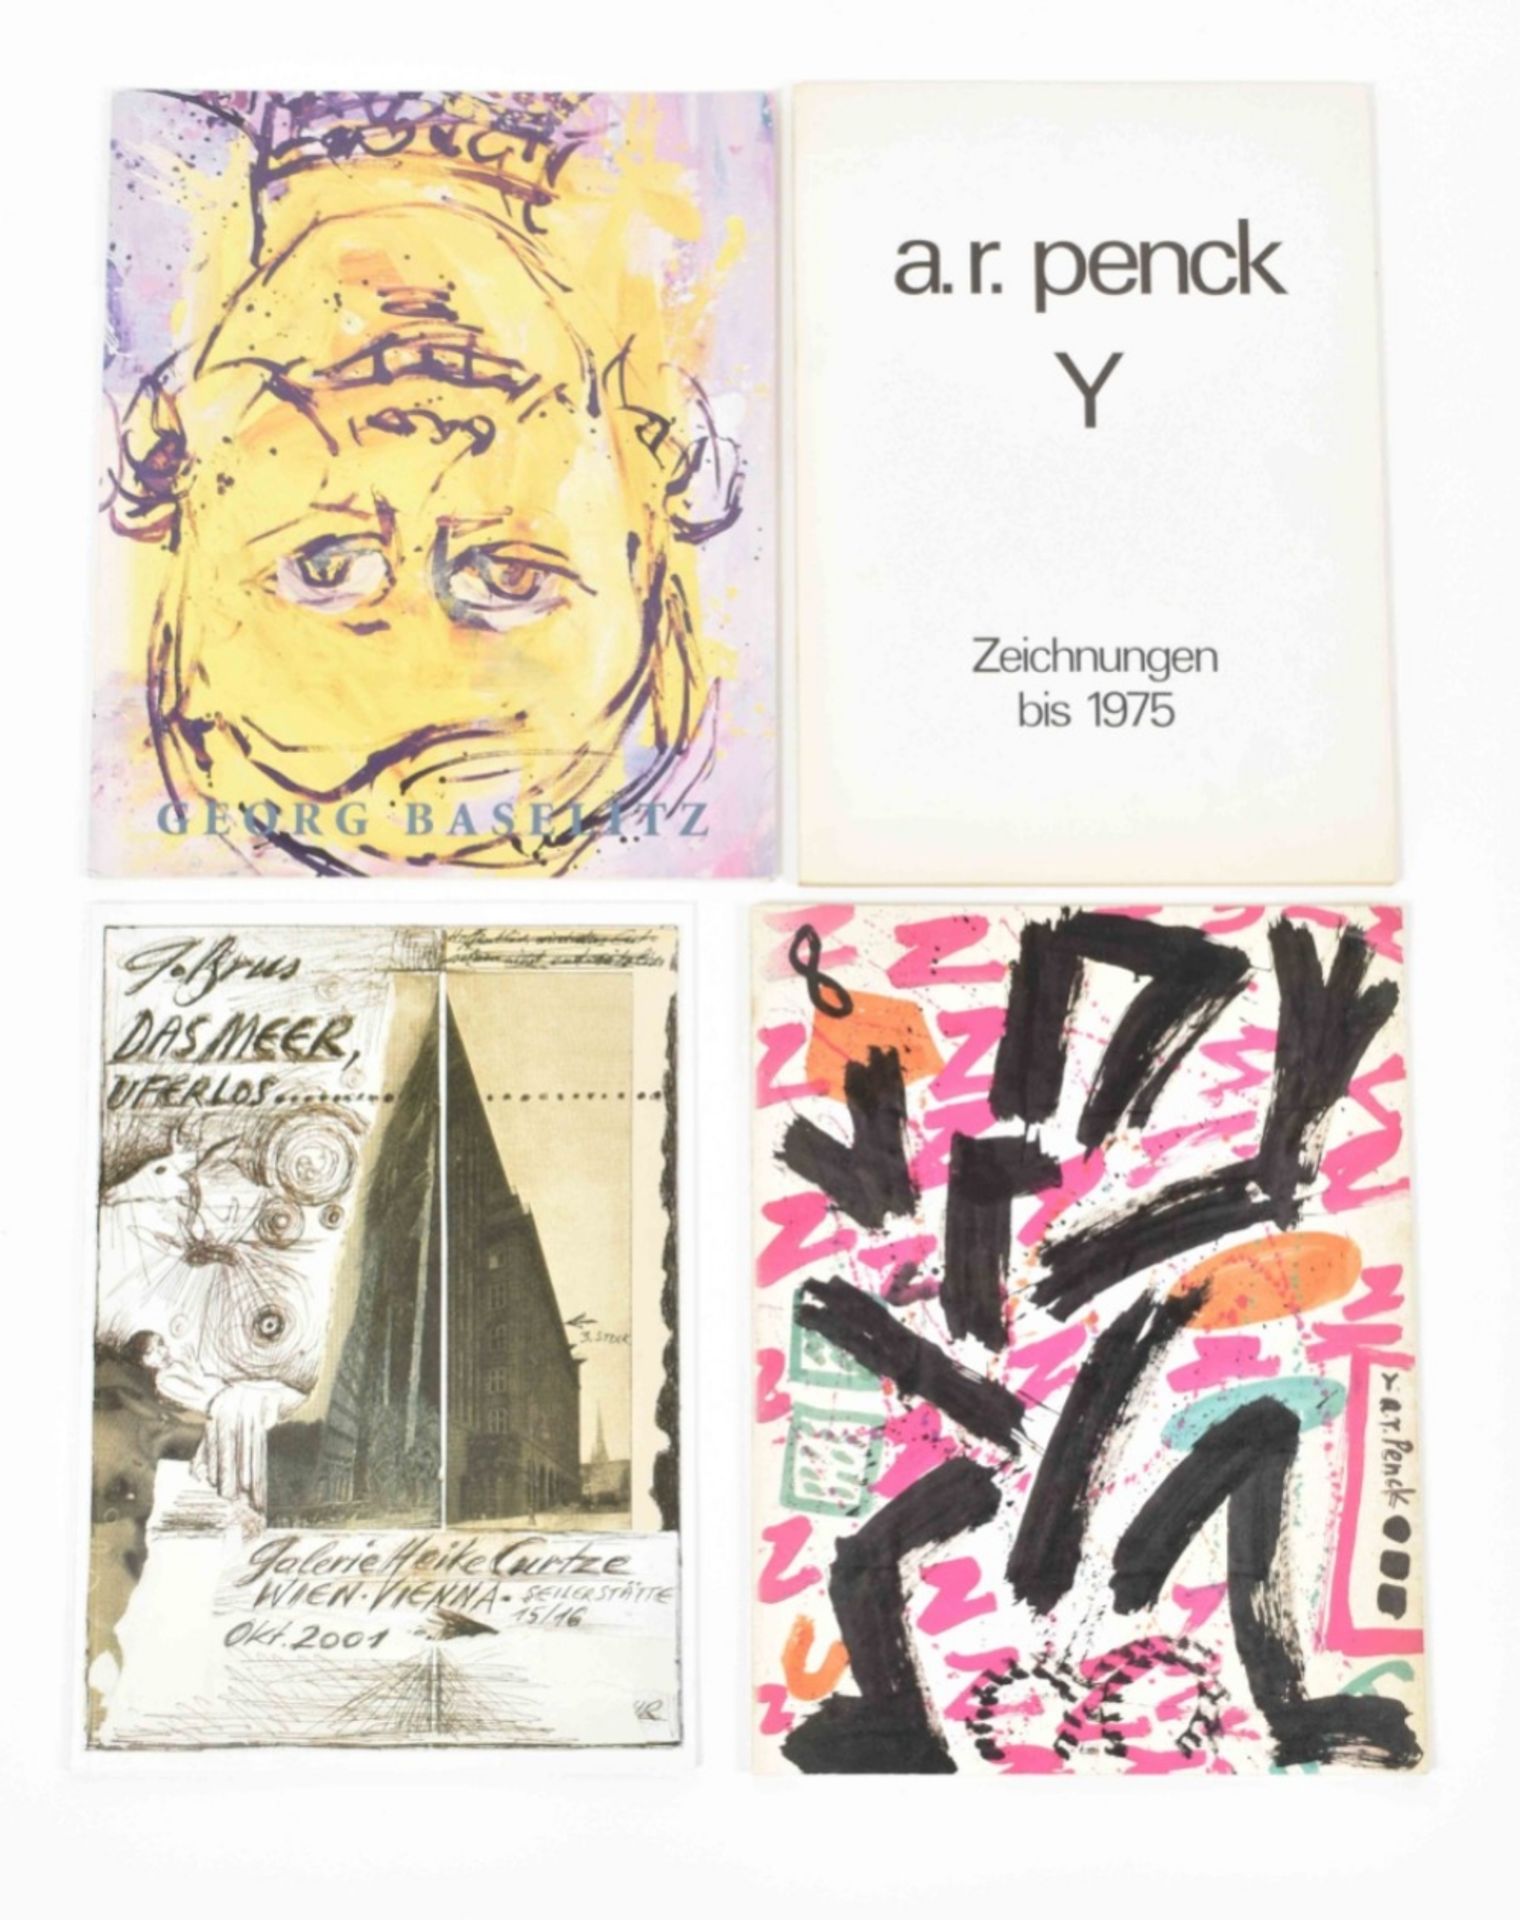 20 publications on Brus, Baselitz and Penck: Günter Brus. De Lyrium - Image 6 of 7